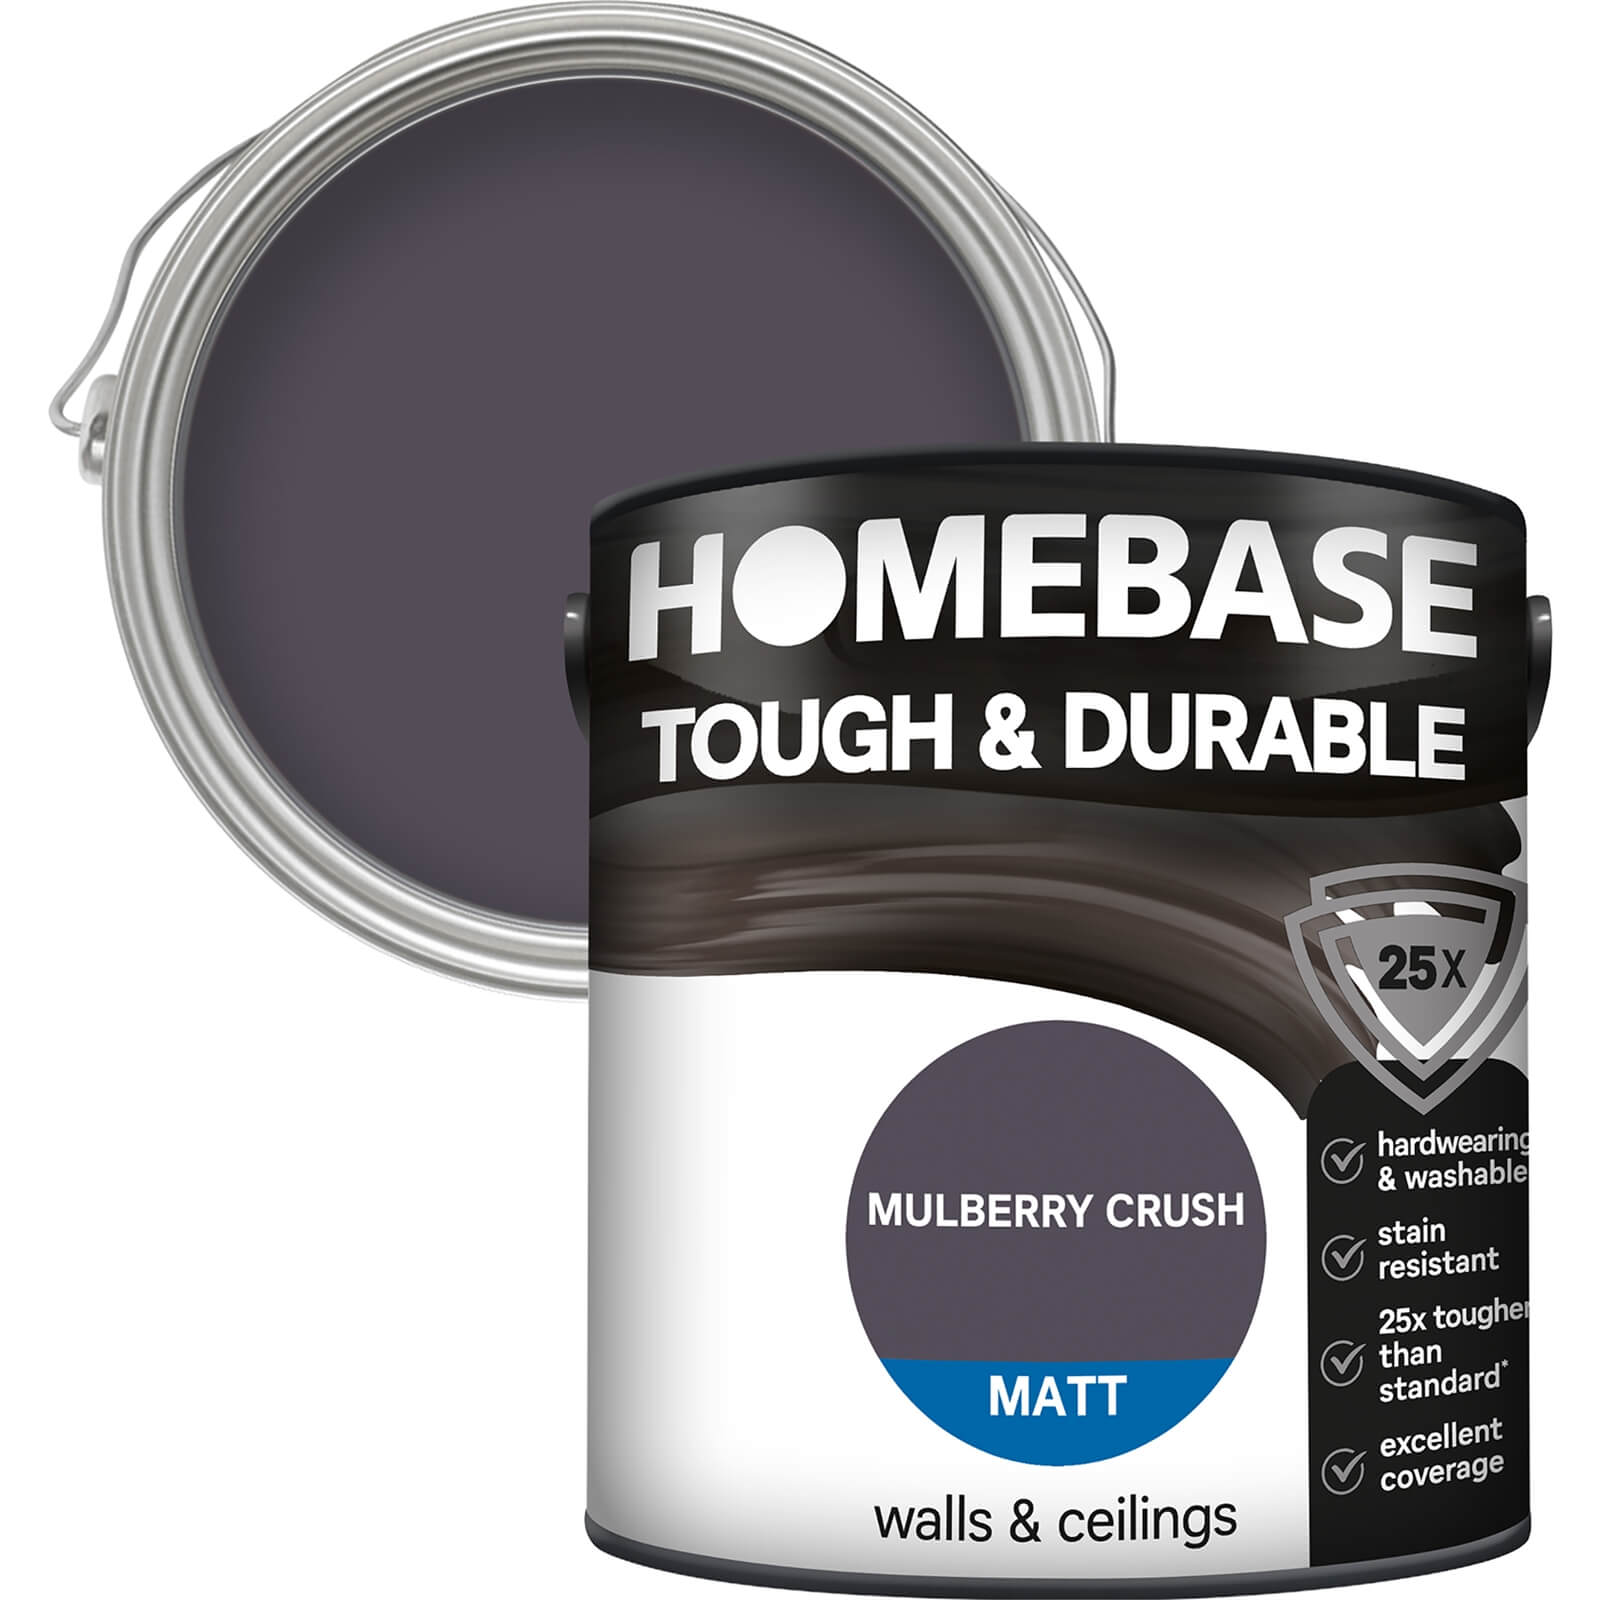 Homebase Tough & Durable Matt Paint Mulberry Crush - 2.5L